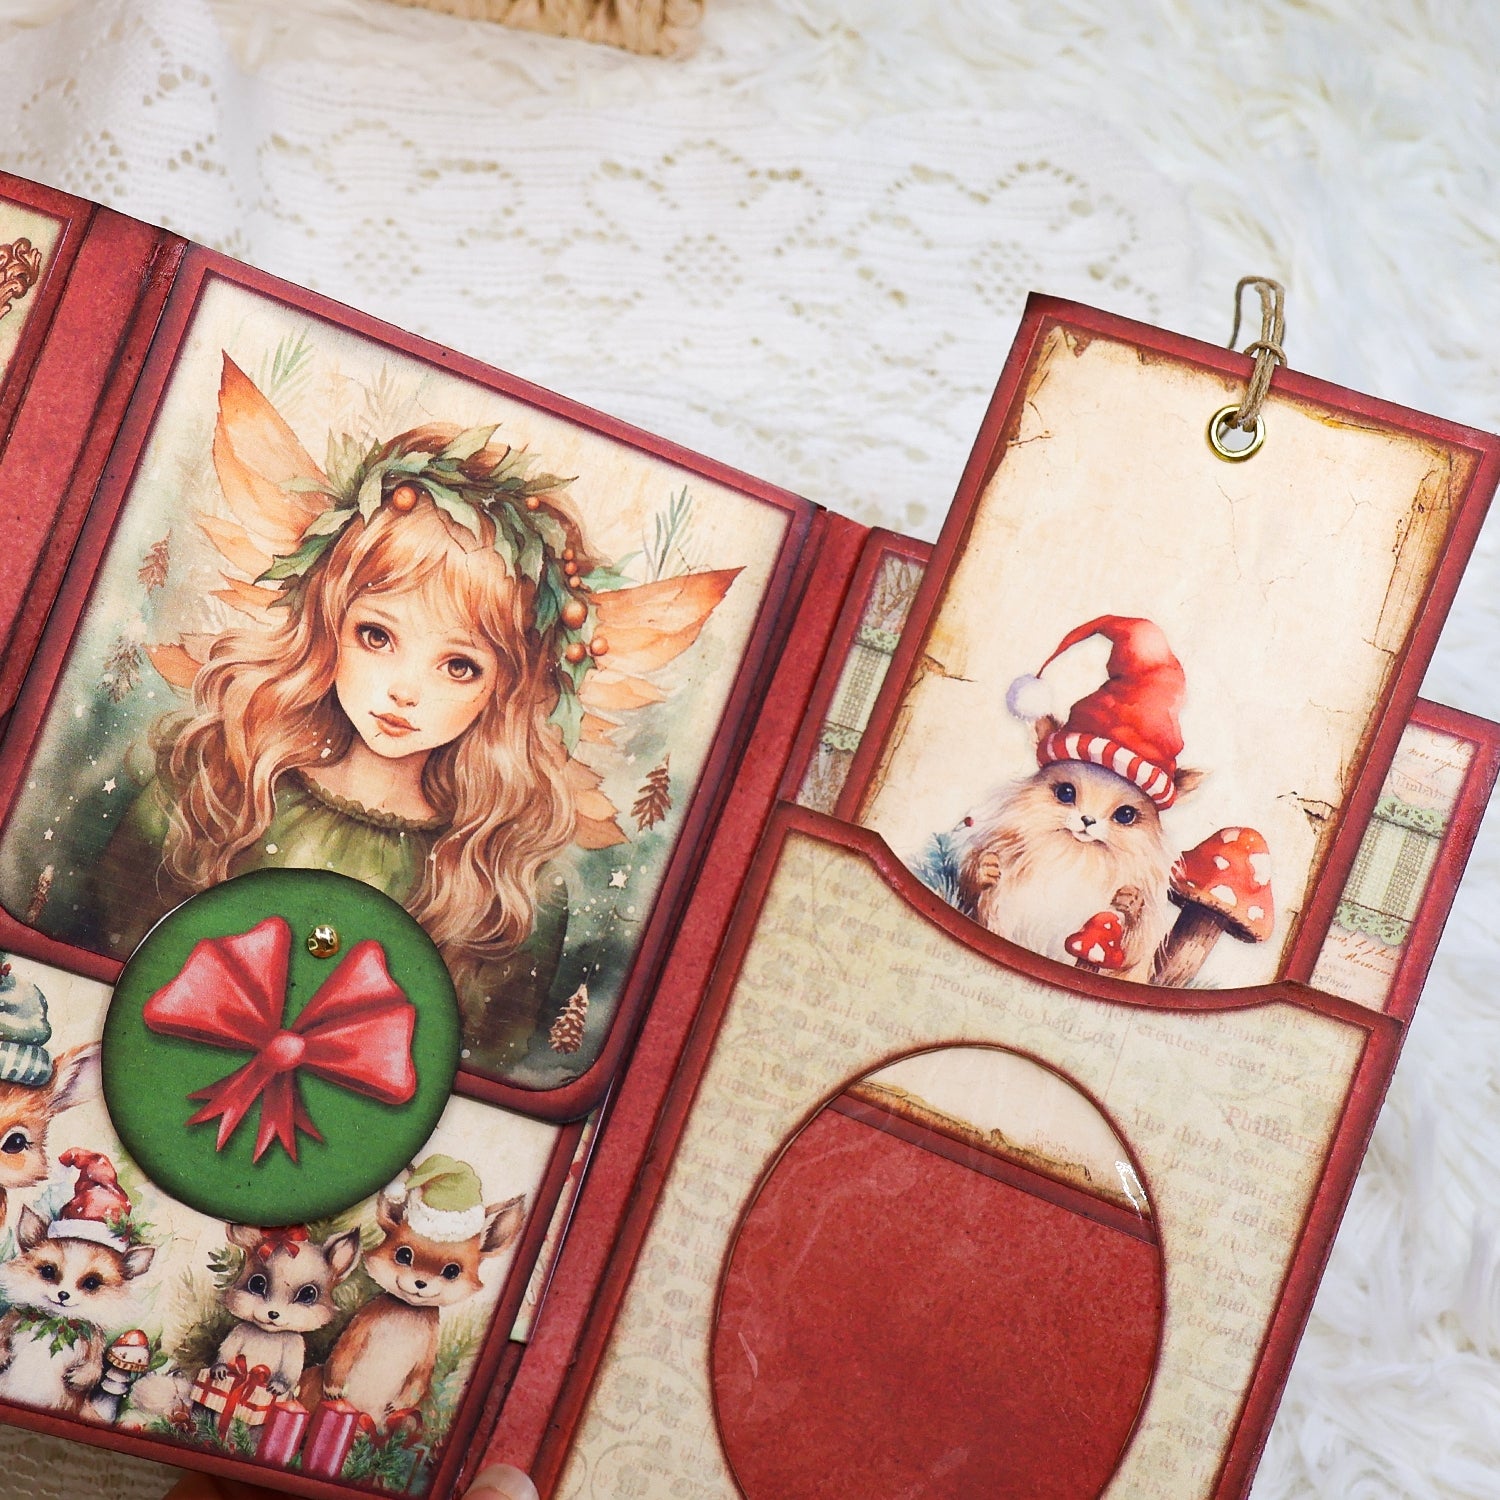 Christmas Fairies Mini Album Handmade Booklet Craft Kit 4